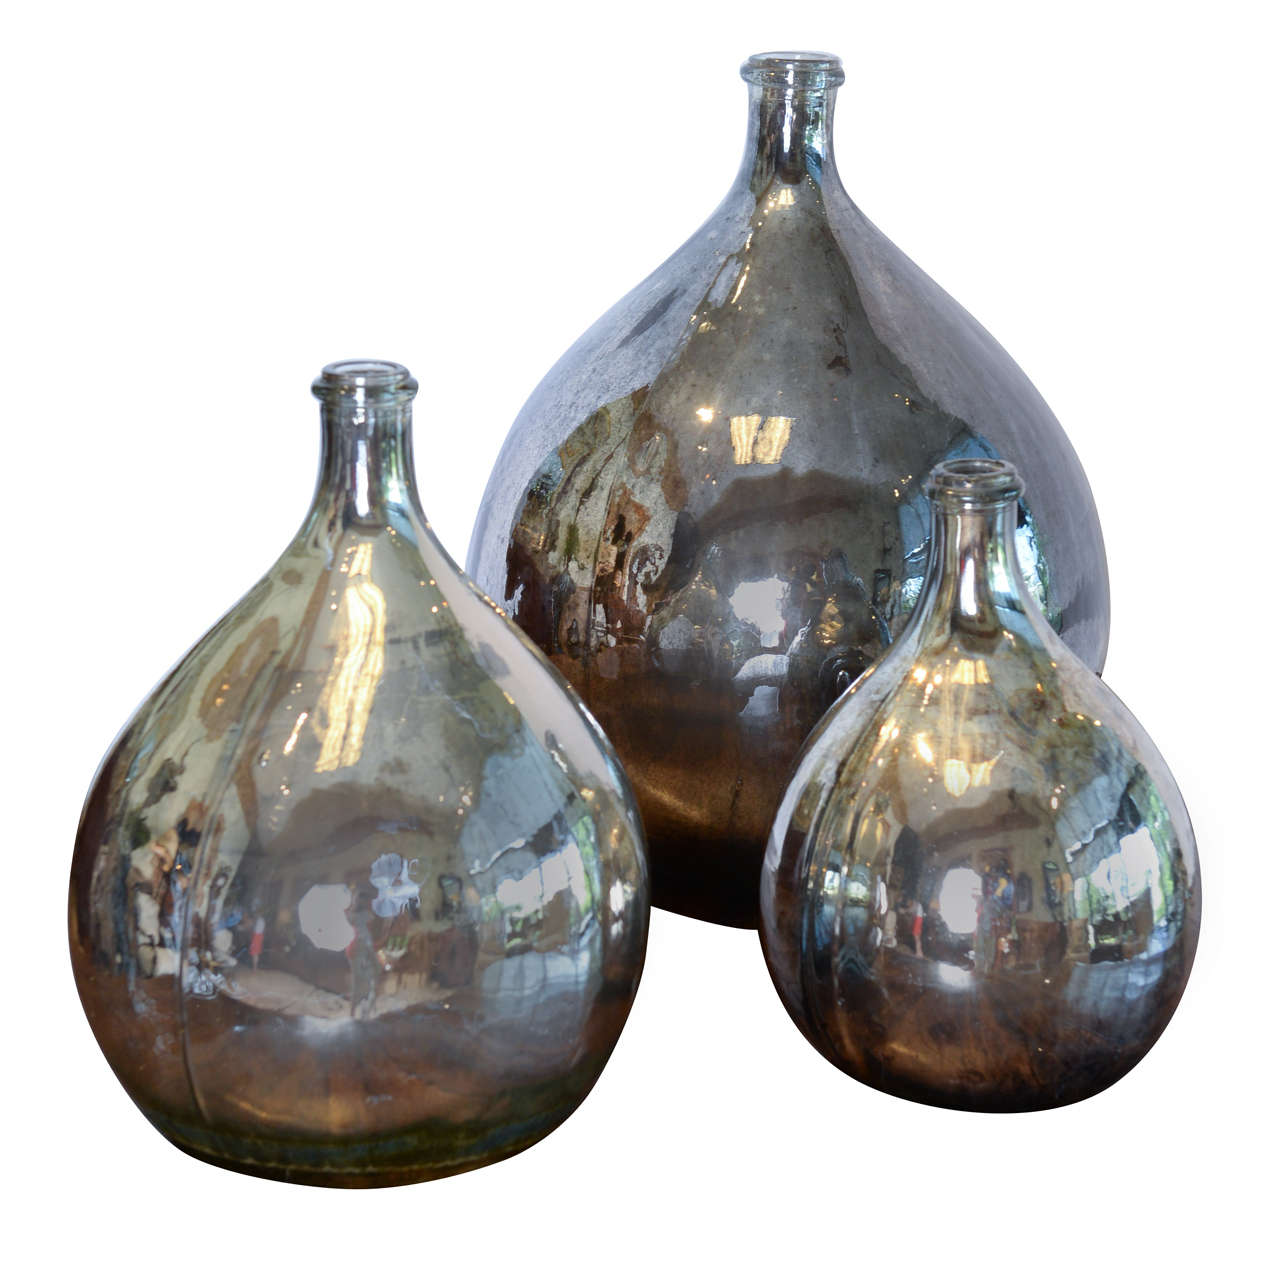 Collection of Mercury Glass Calvados Bottles